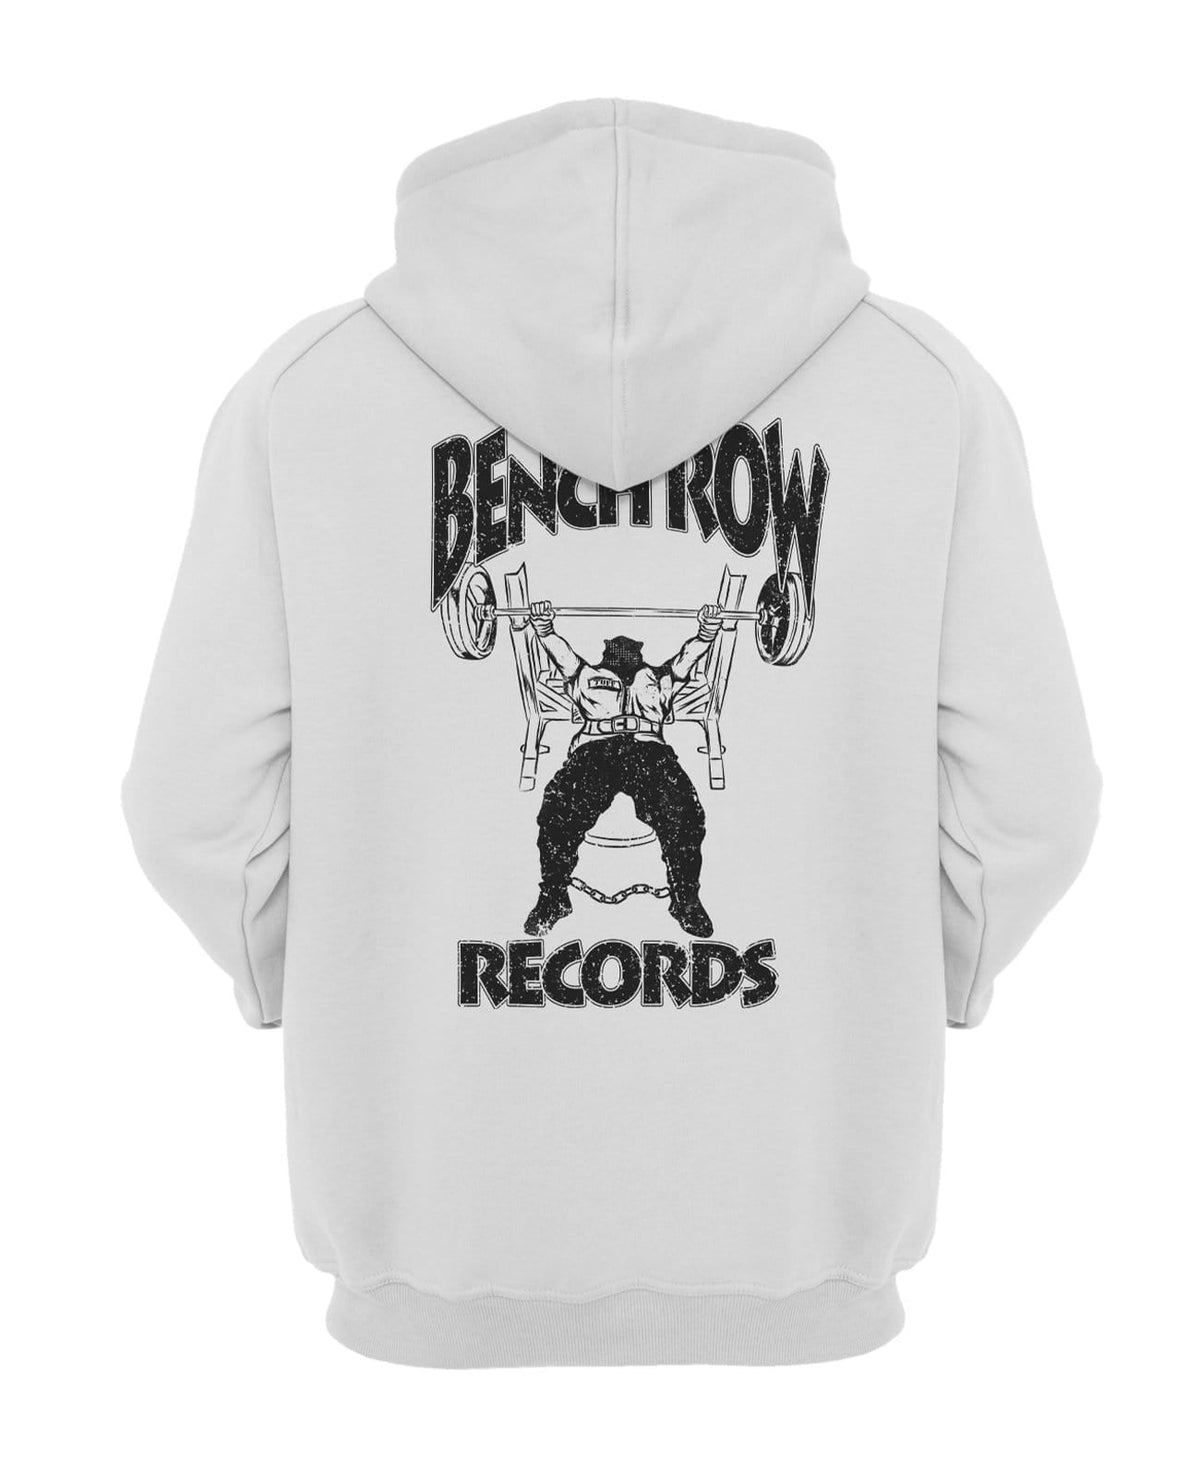 Bench Row Records Hooded Sweatshirt XS / White TuffWraps.com